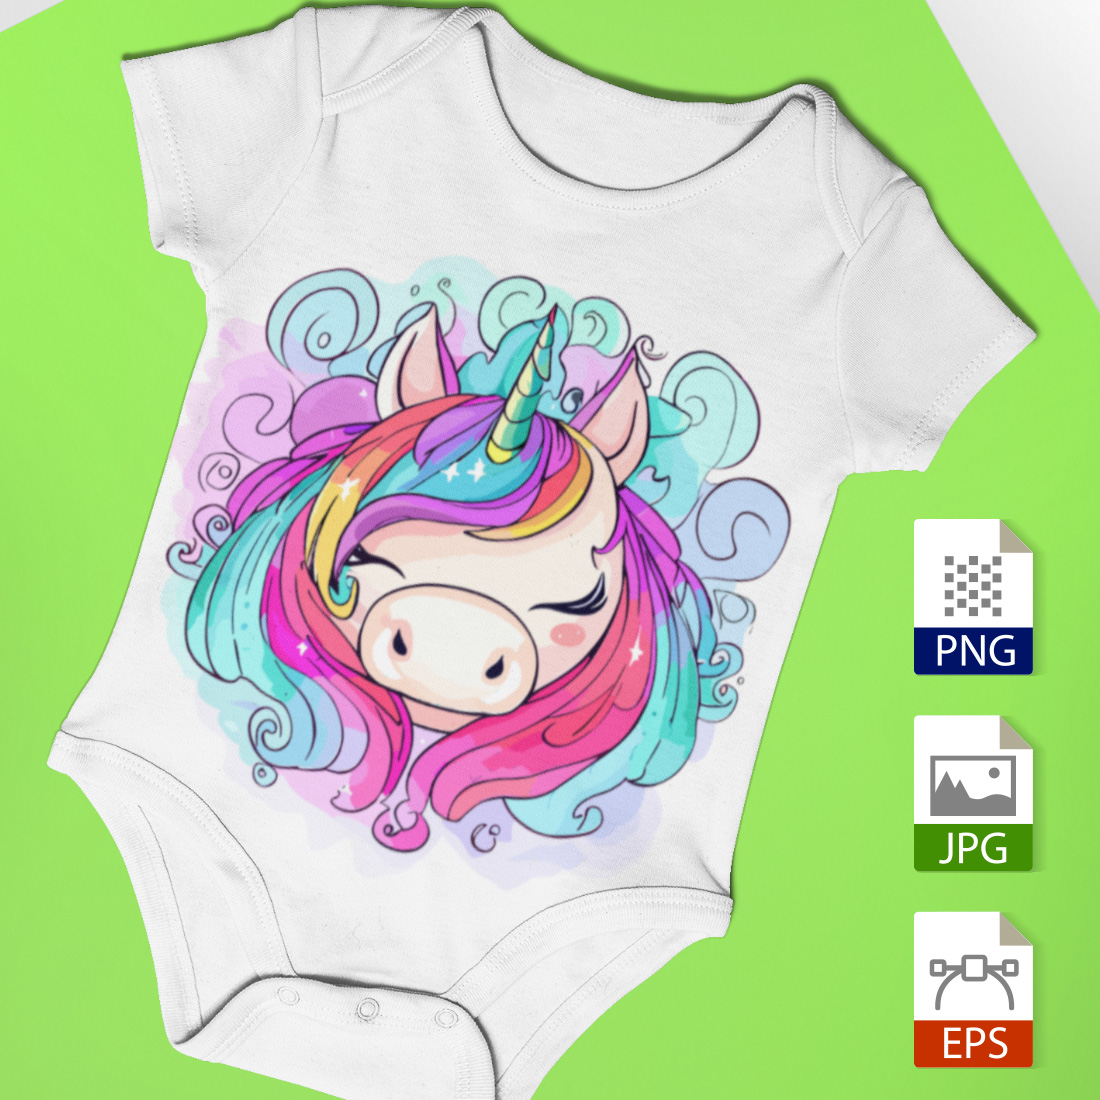 Whimsical Baby Unicorn Bliss cover image.